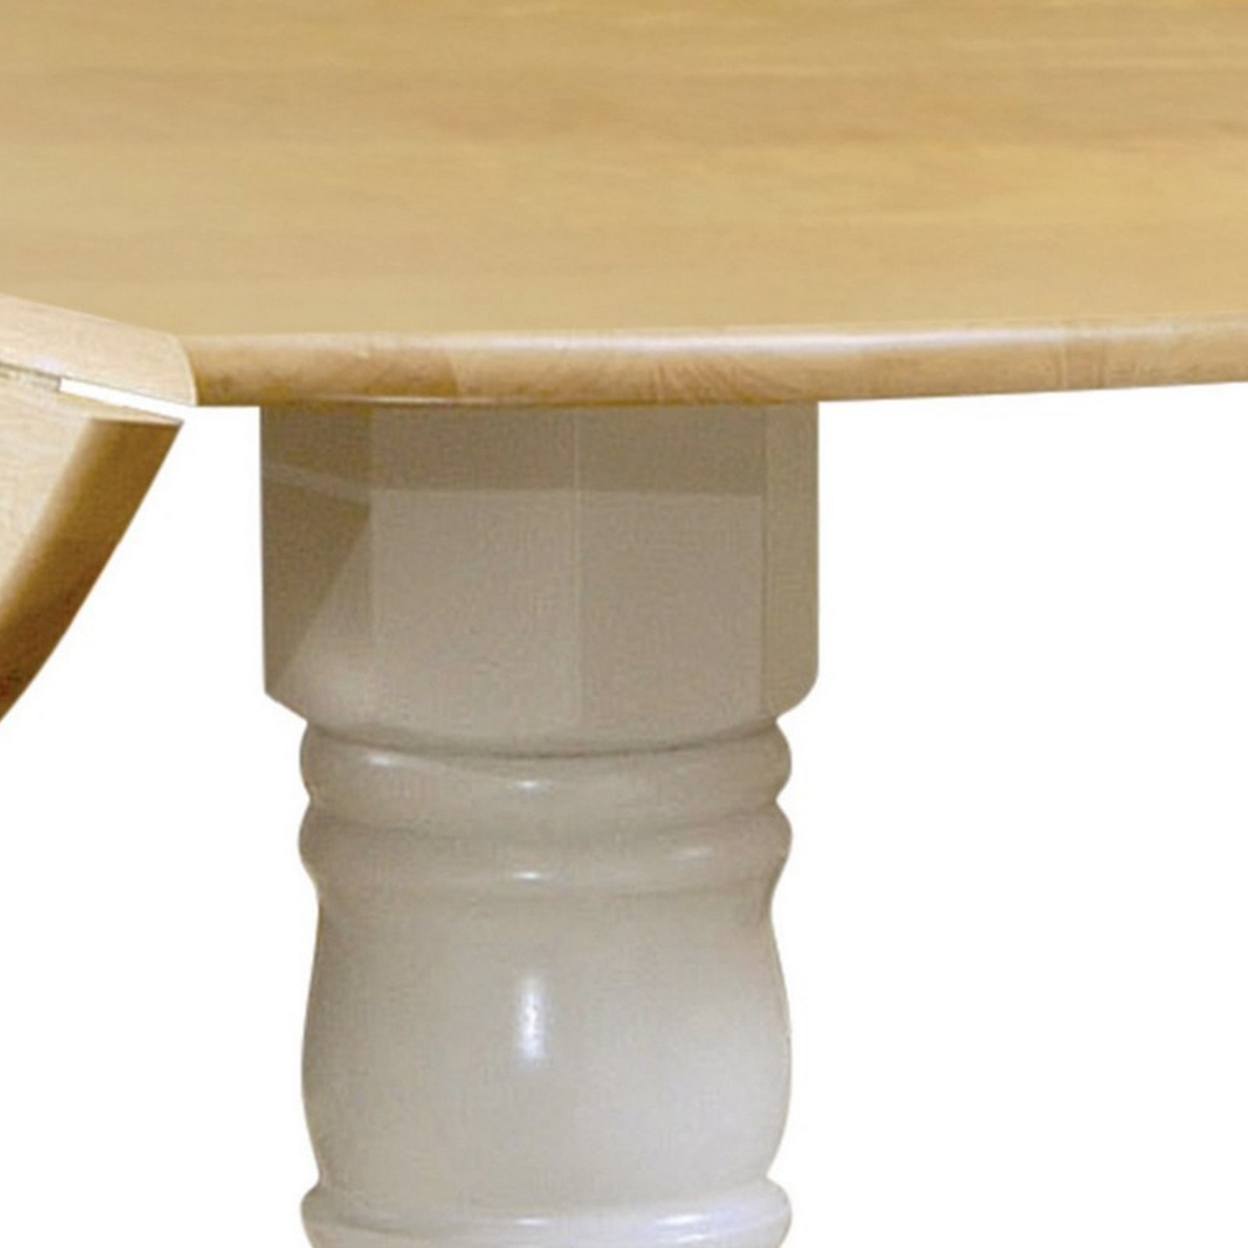 Giva 40 Inch Round Drop Leaf Dining Table, Brown Top, White Pedestal Base- Saltoro Sherpi